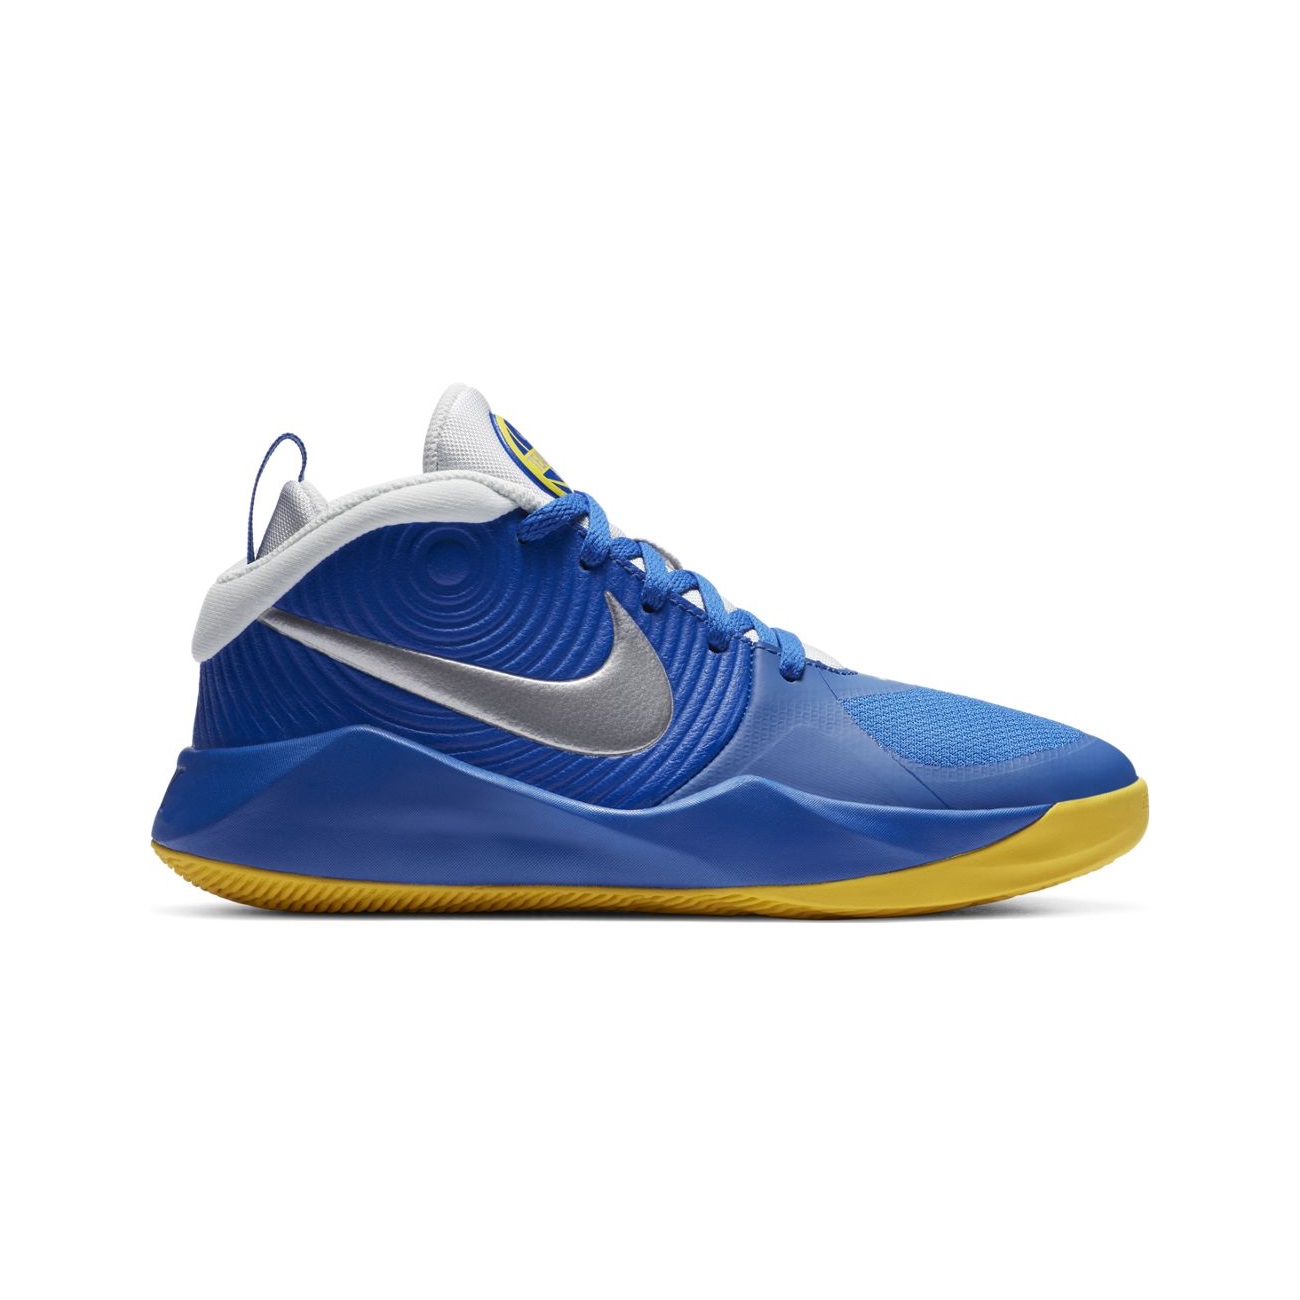 Zapatilla de baloncesto - Junior - Nike Team Hustle D 9 AzulPlata - AQ4224-404 | ferrersport.com | Tienda de deportes